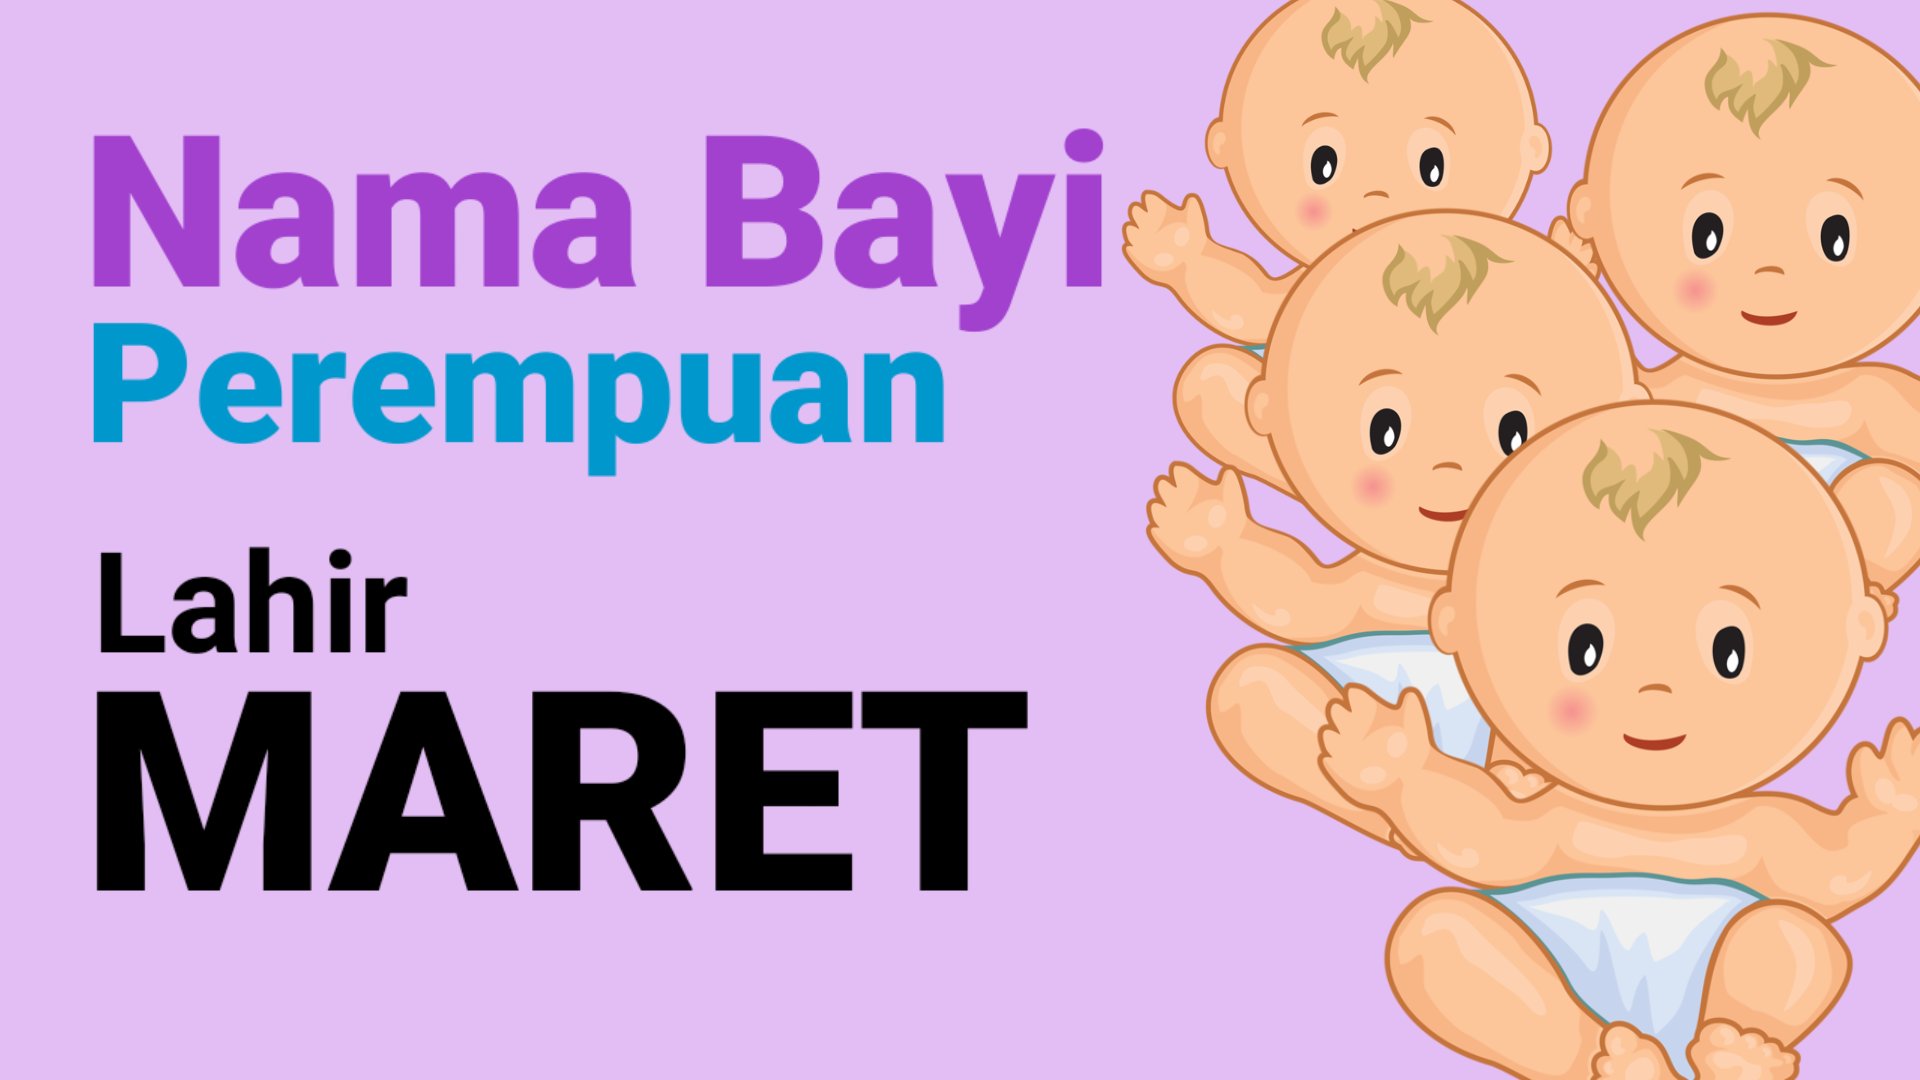 Islam perempuan nama maret bayi bulan lahir 2022 menurut Nama Bayi